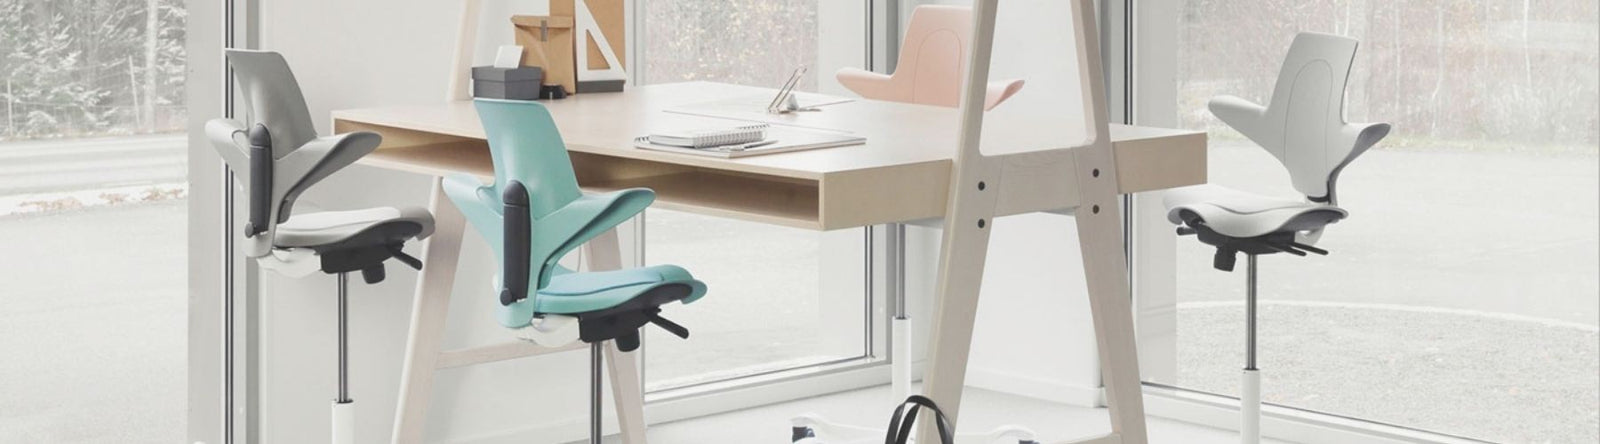 Ergonomic Office Chair & Furniture Supplier Toronto, Ontario, Canada